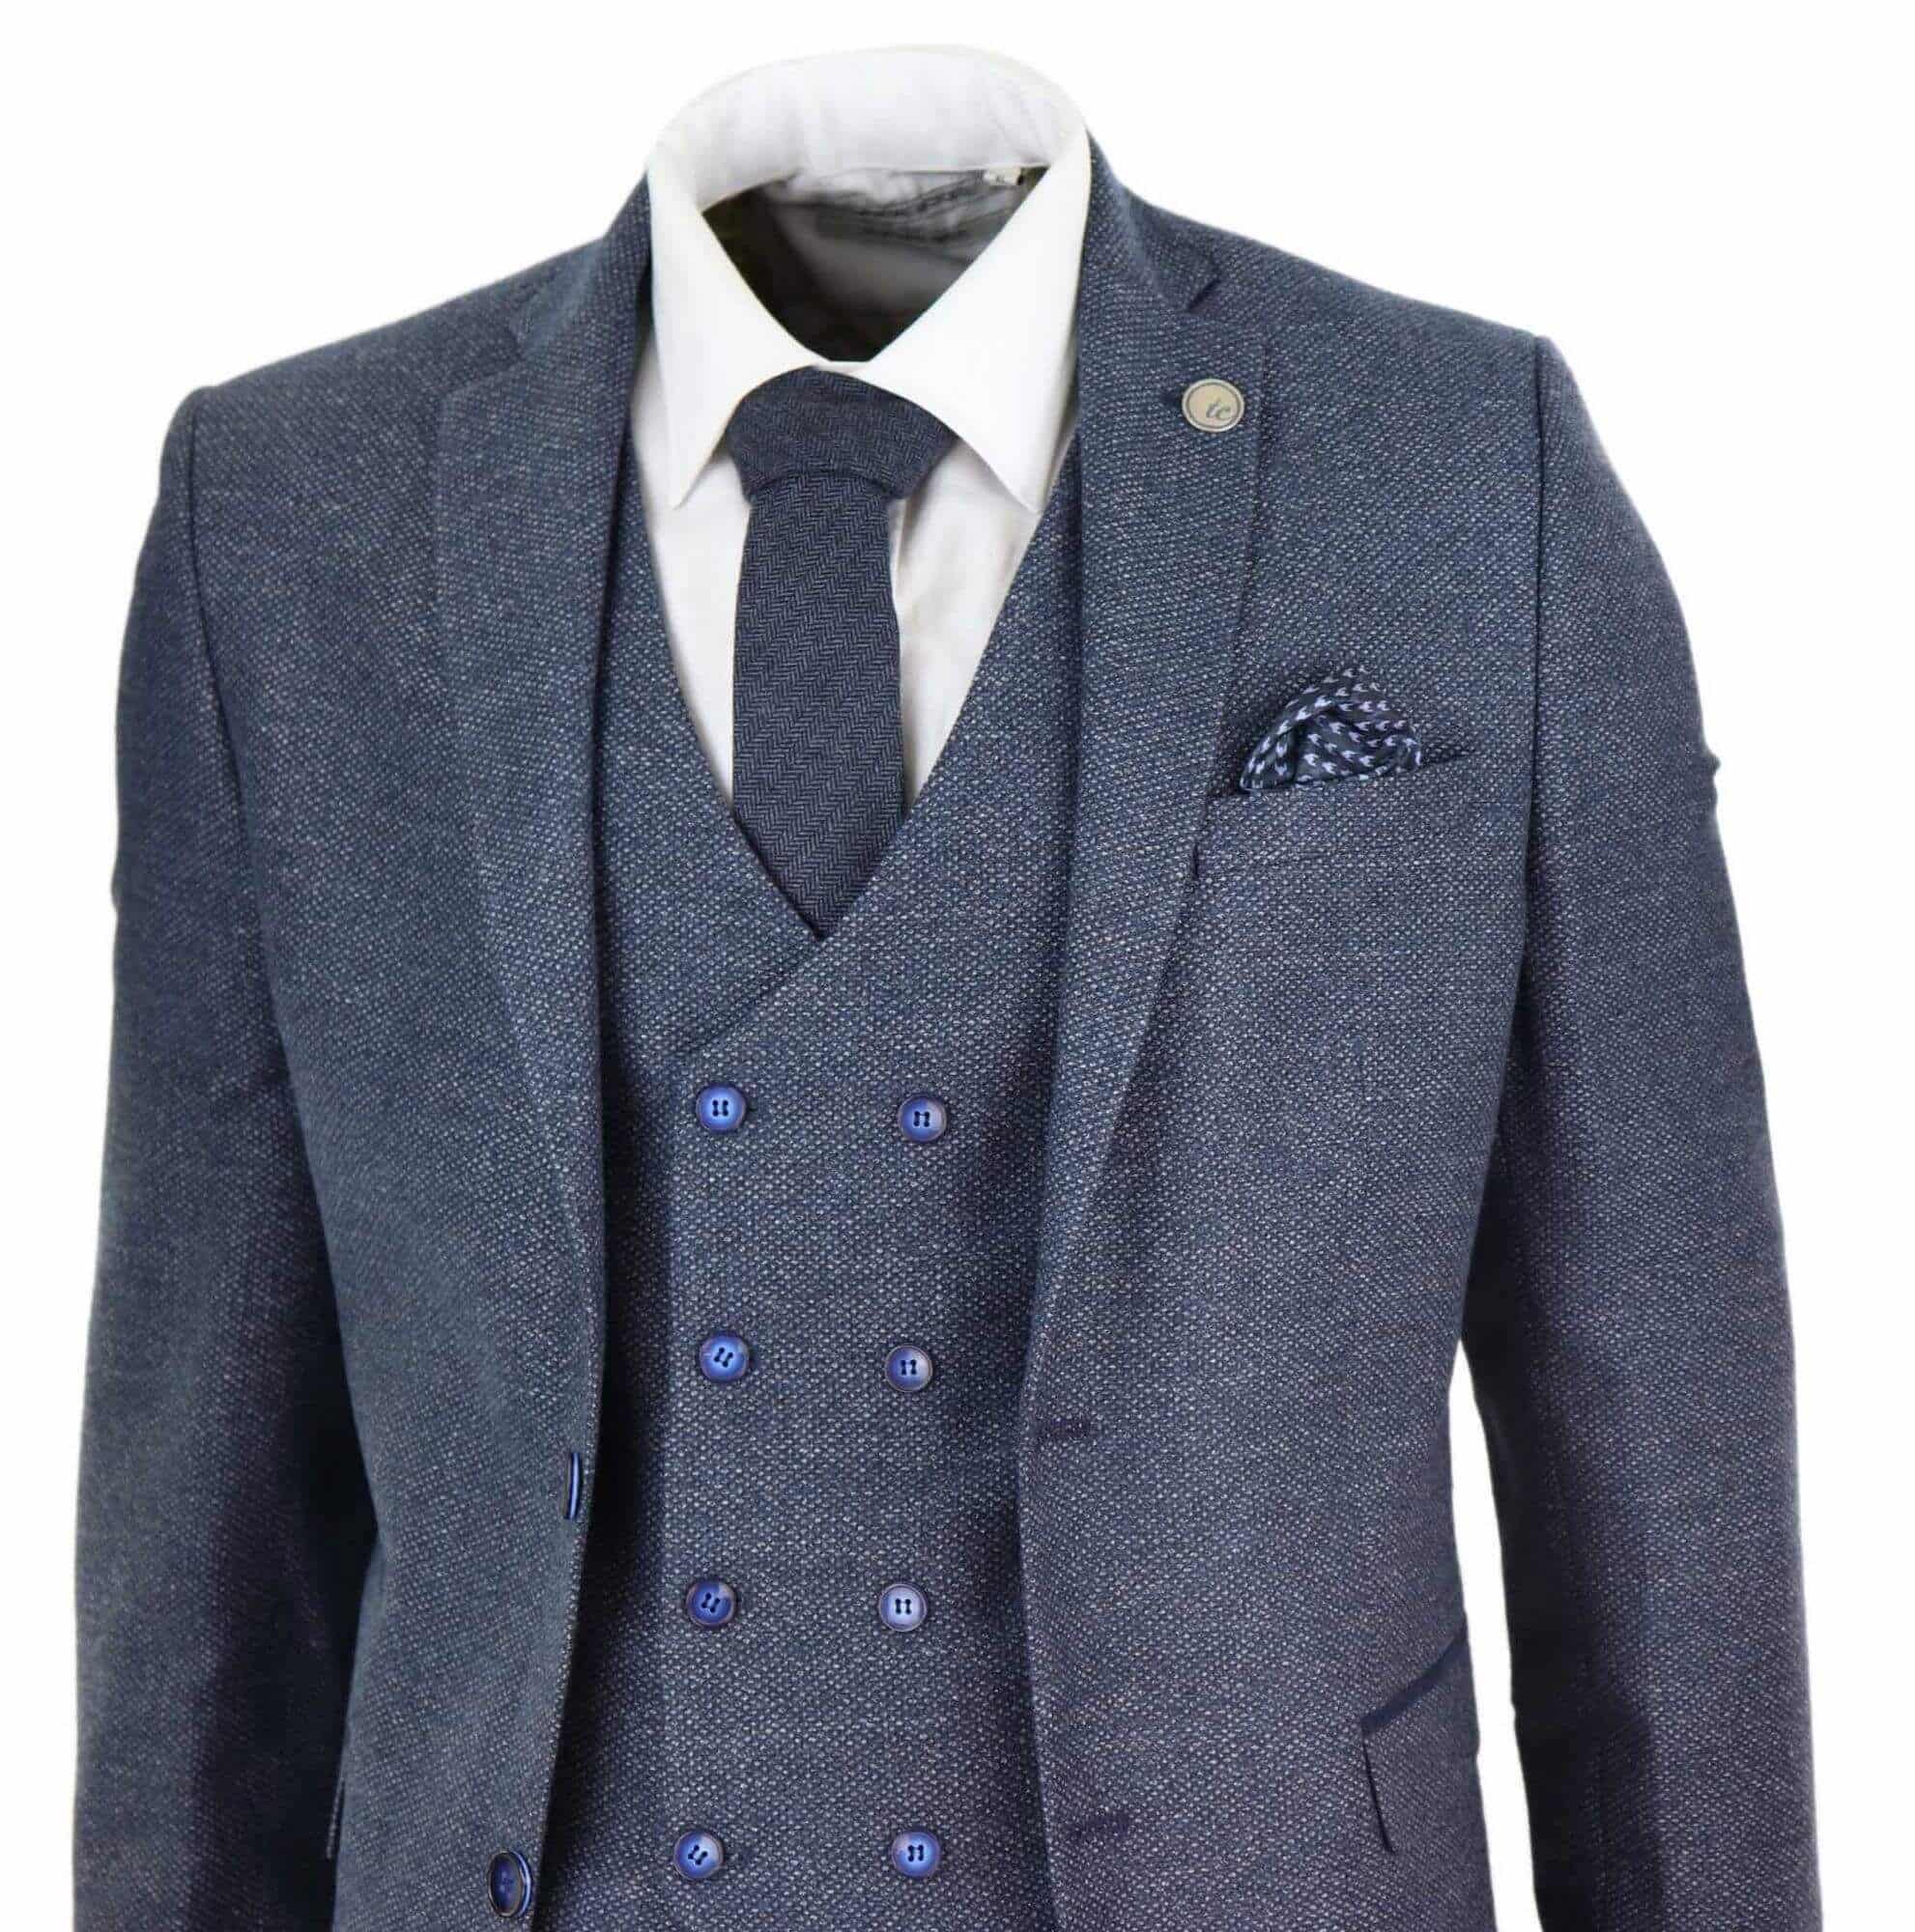 Men's 3 Piece Suits, Suits with Waistcoats